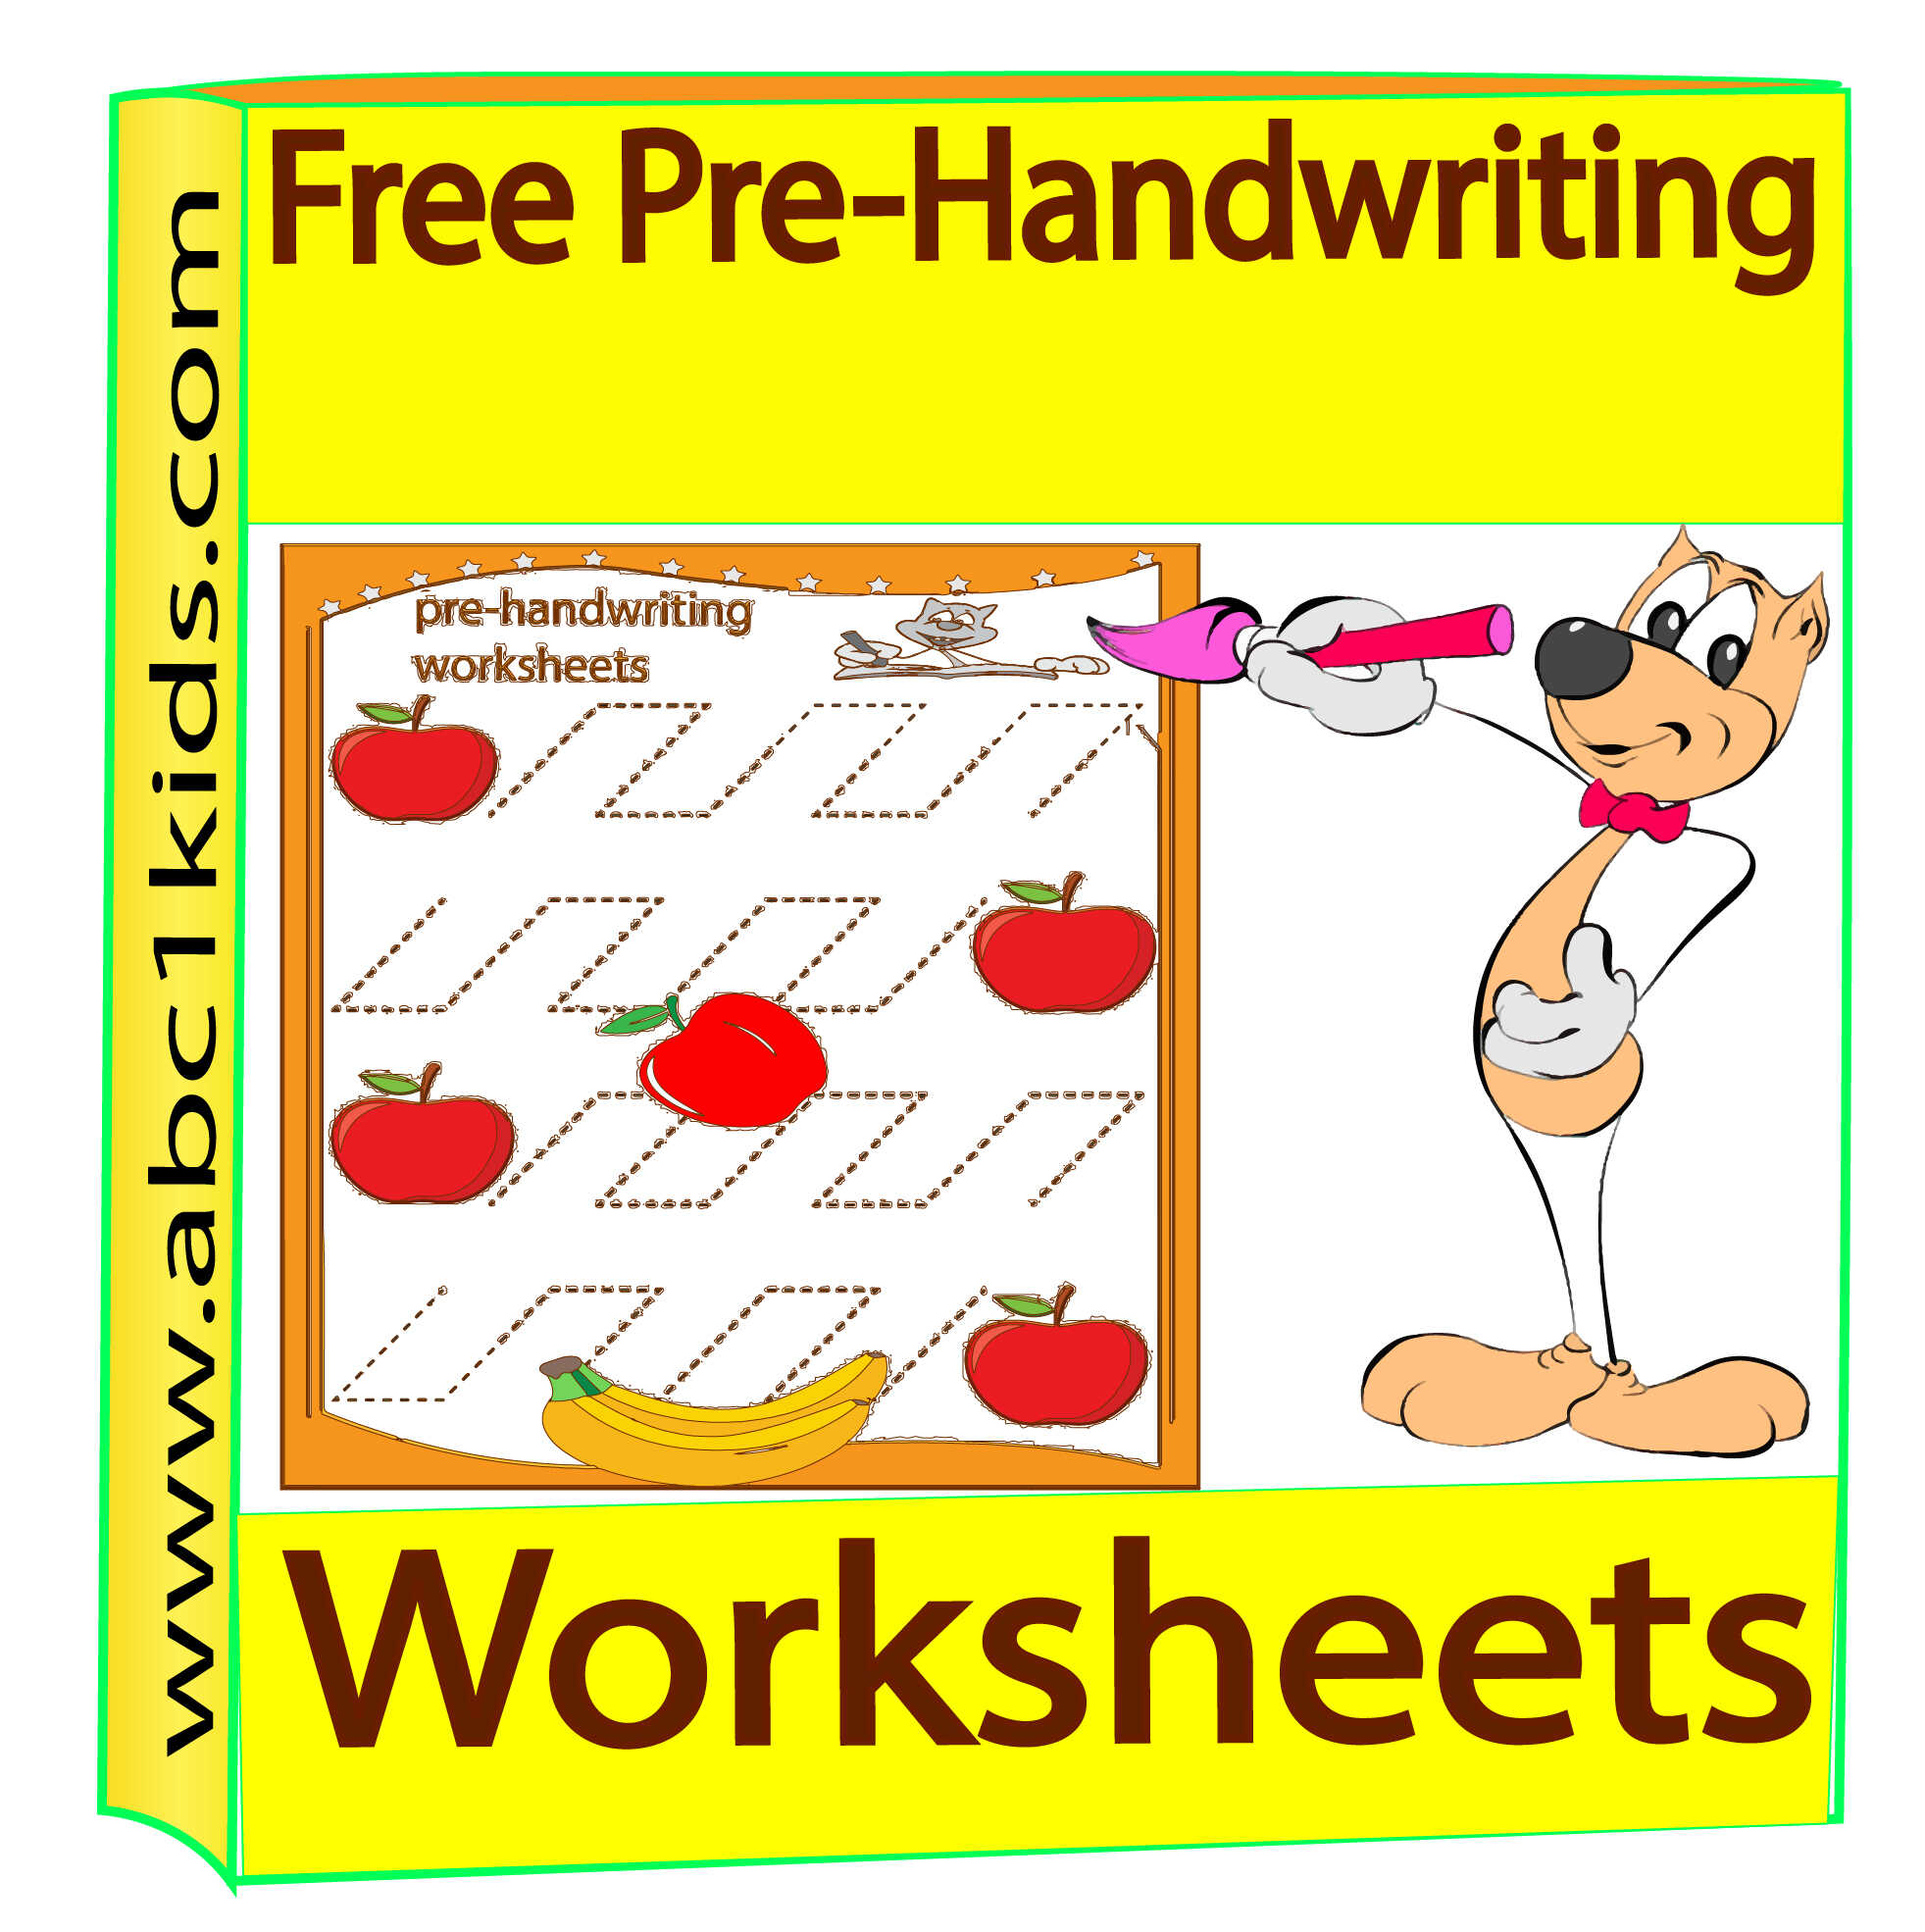 Free Handwriting worksheets